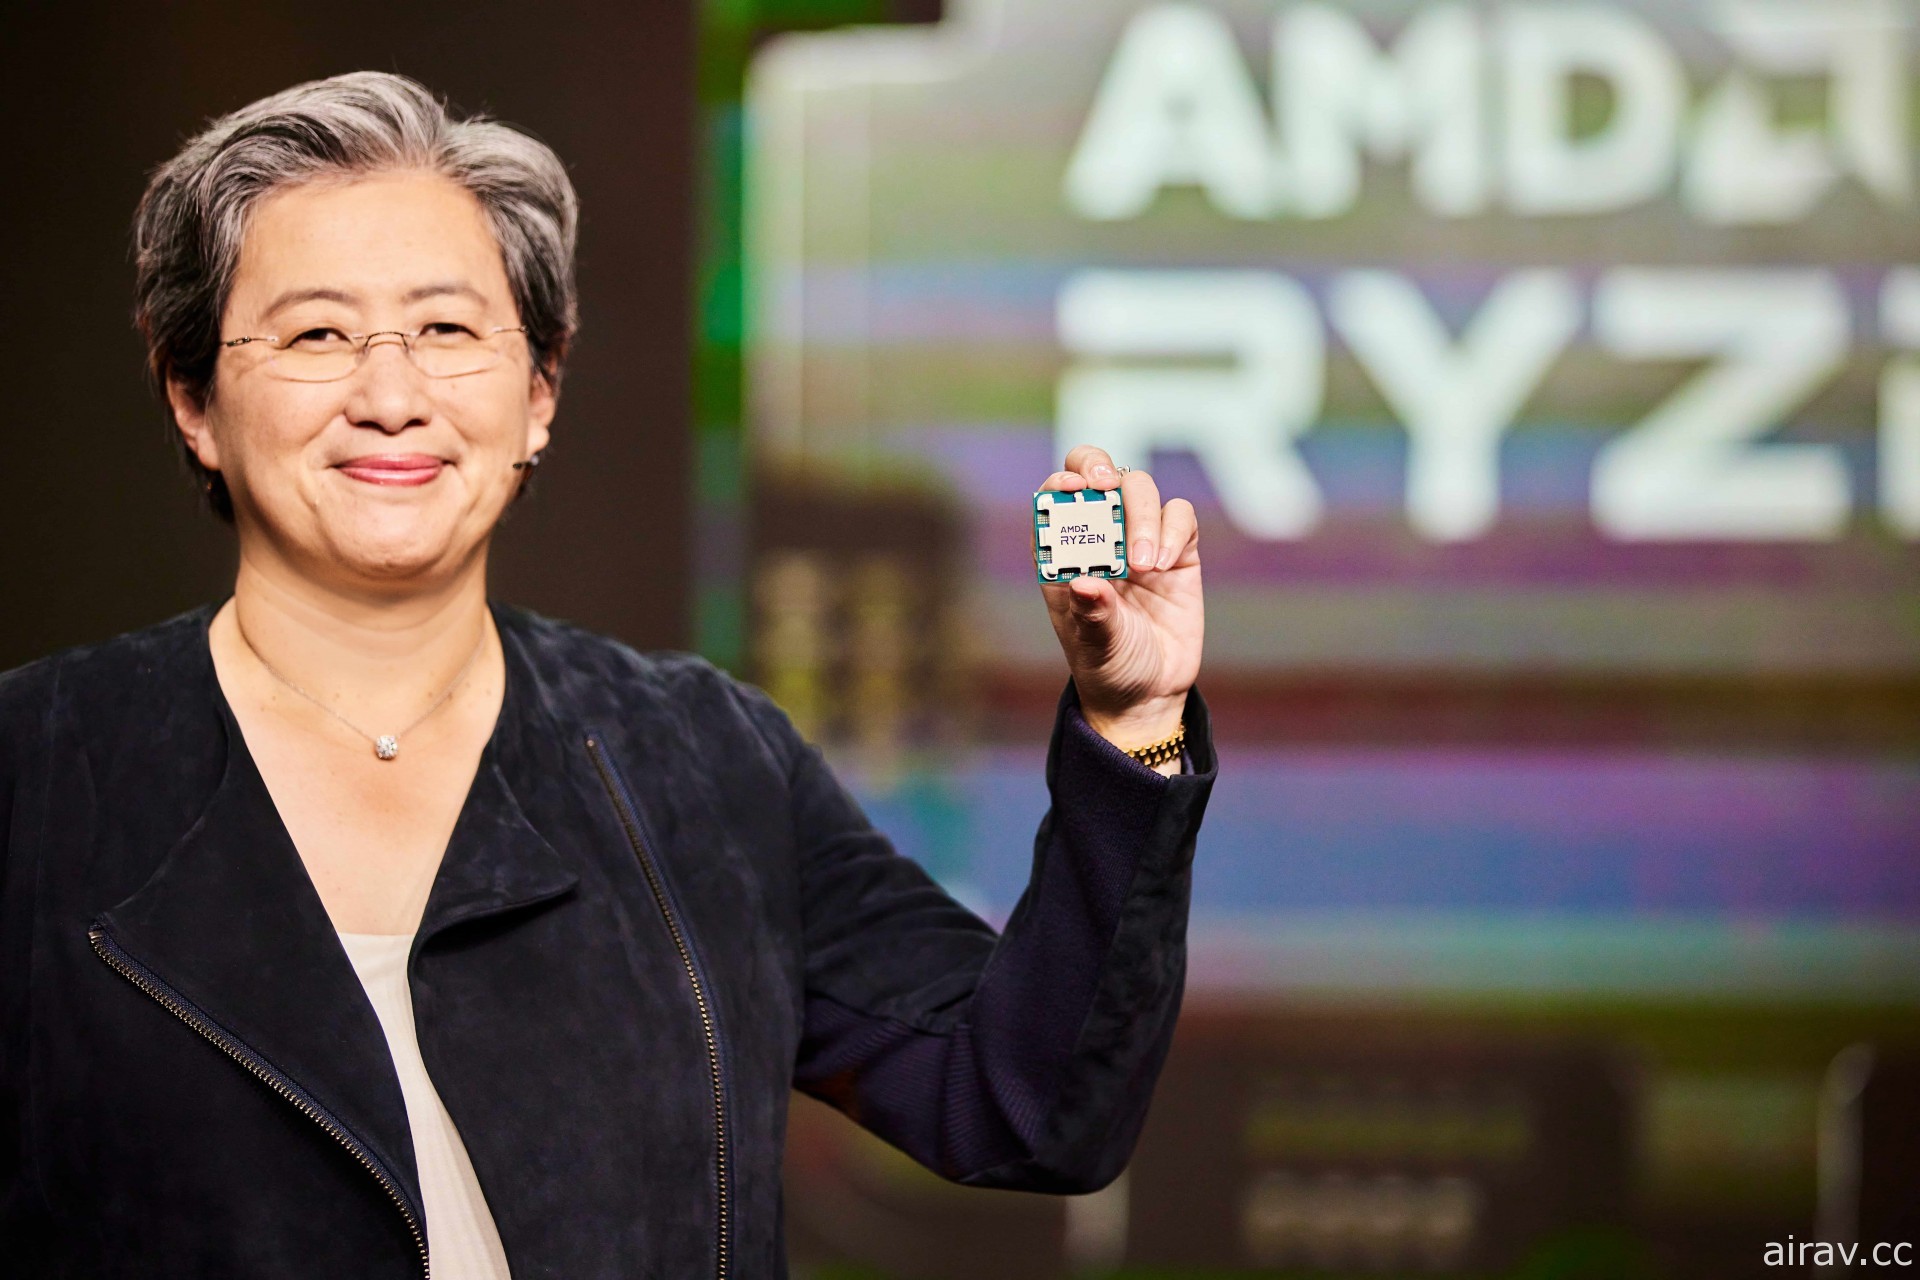 Ryzen 6000 處理器曝光　AMD 預告 Ryzen 7000 今年下半年登場